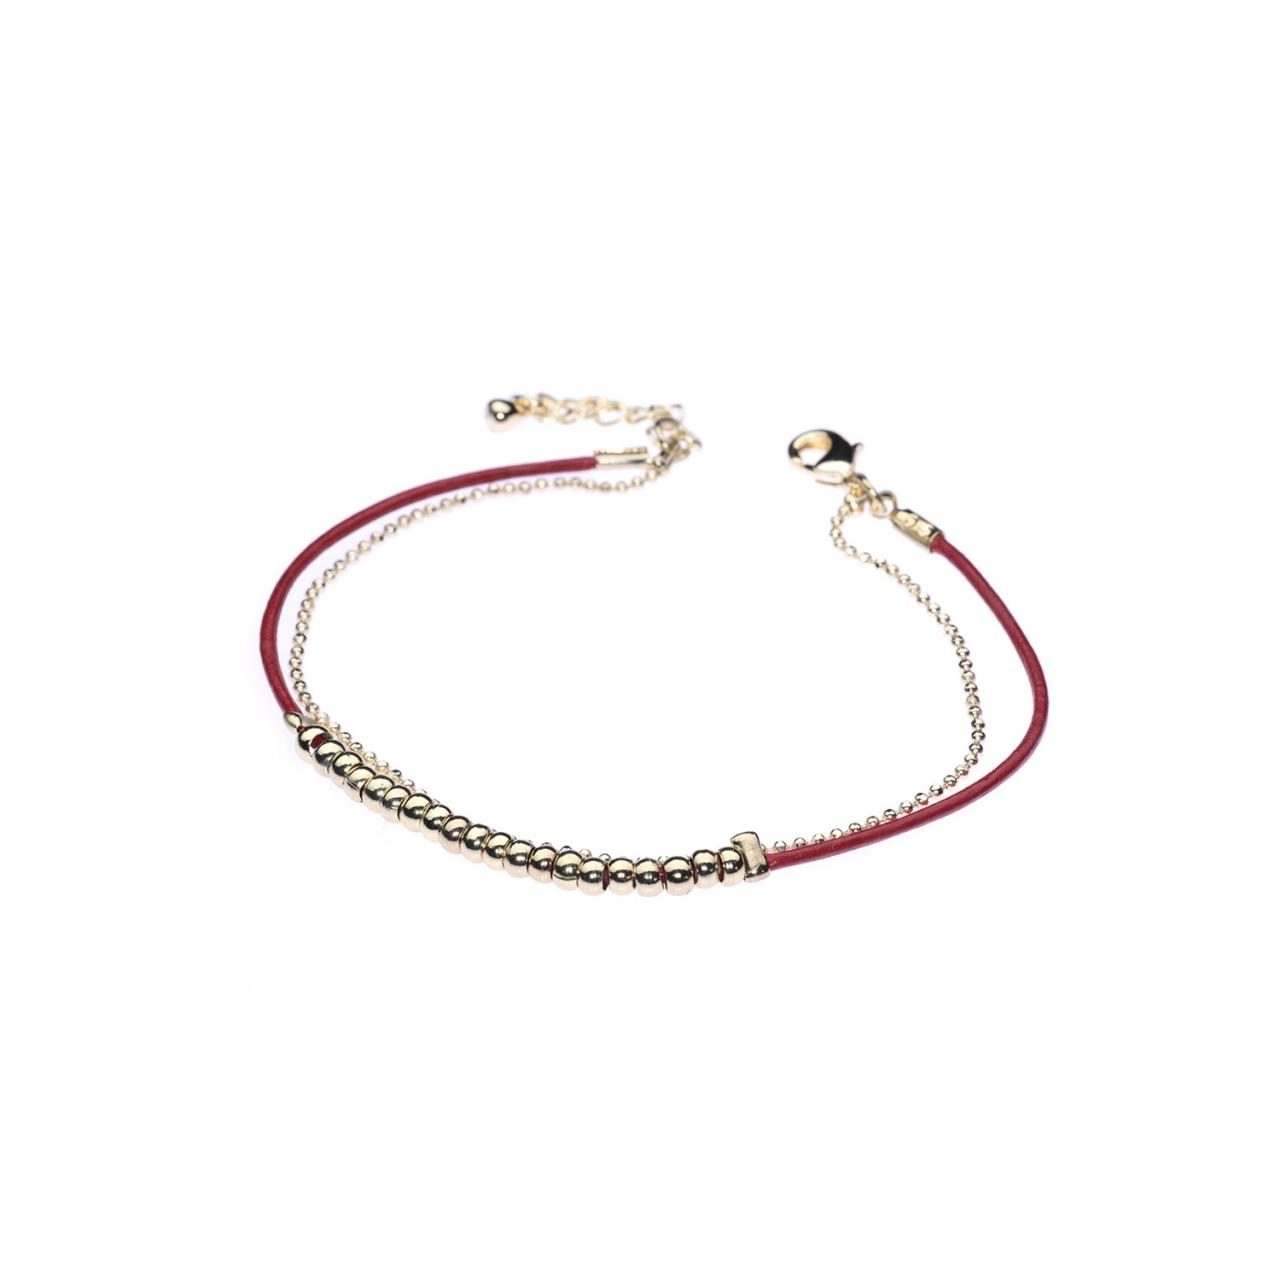 String Bracelet / Red String Bracelet / String Of Fate / Good Luck Bracelet / Gold Beads / Red String / Spiritual Bracelet / Red Leather